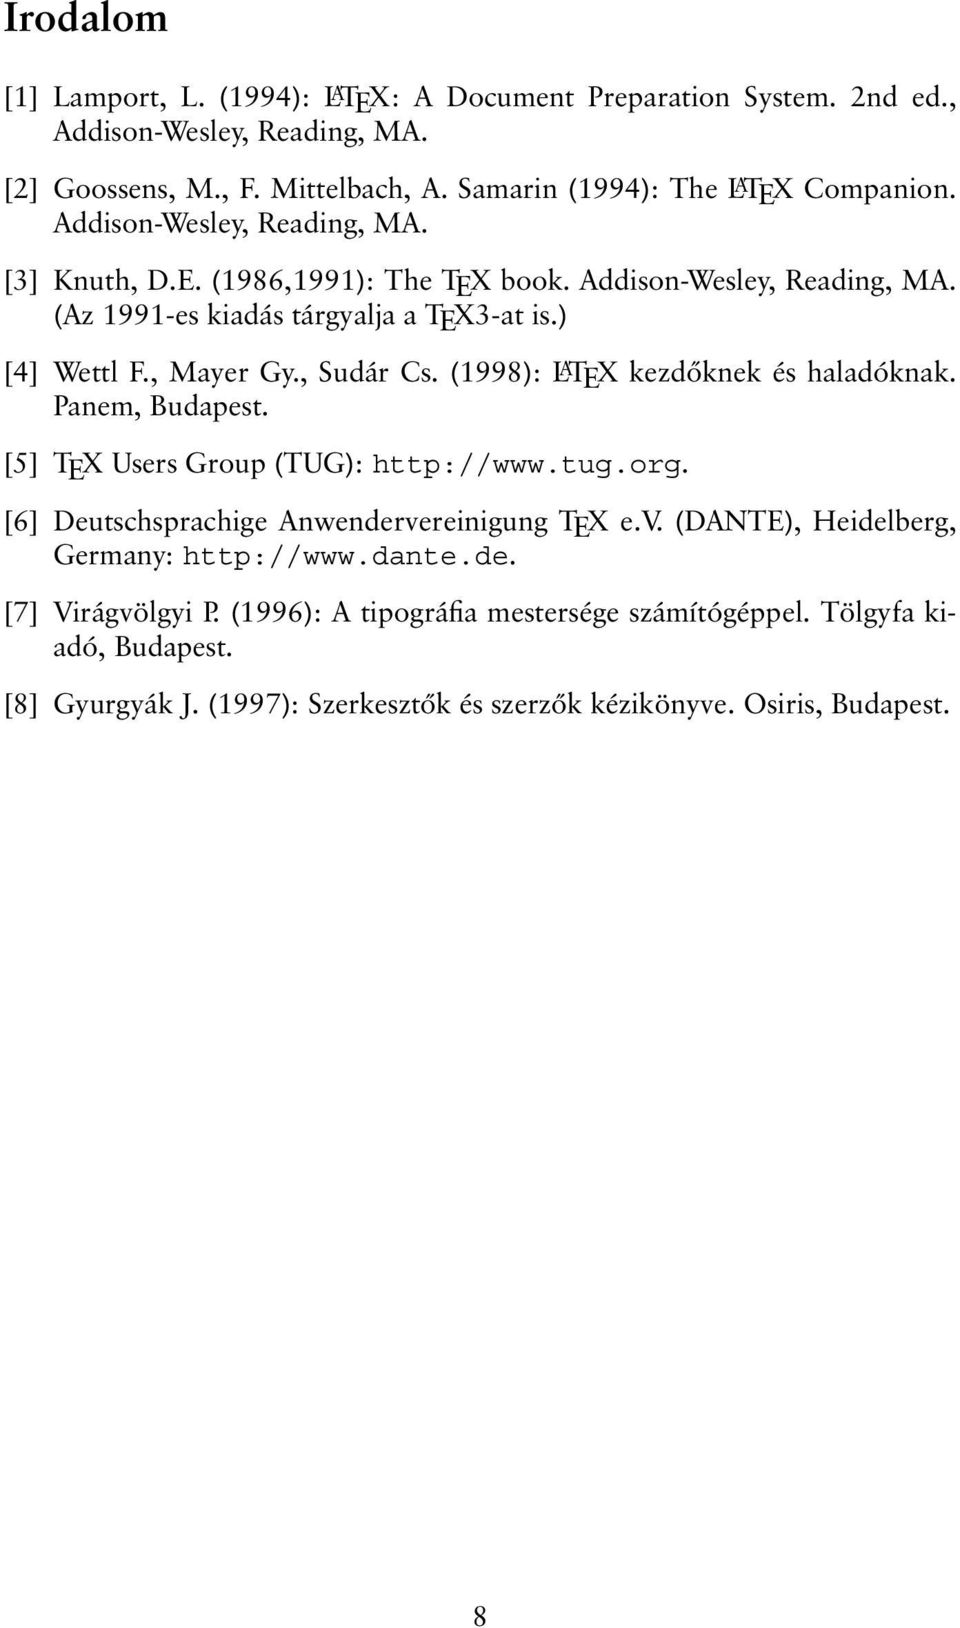 (1998): L A TEX kezdőknek és haladóknak. Panem, Budapest. [5] TEX Users Group (TUG): http://www.tug.org. [6] Deutschsprachige Anwendervereinigung TEX e.v. (DANTE), Heidelberg, Germany: http://www.